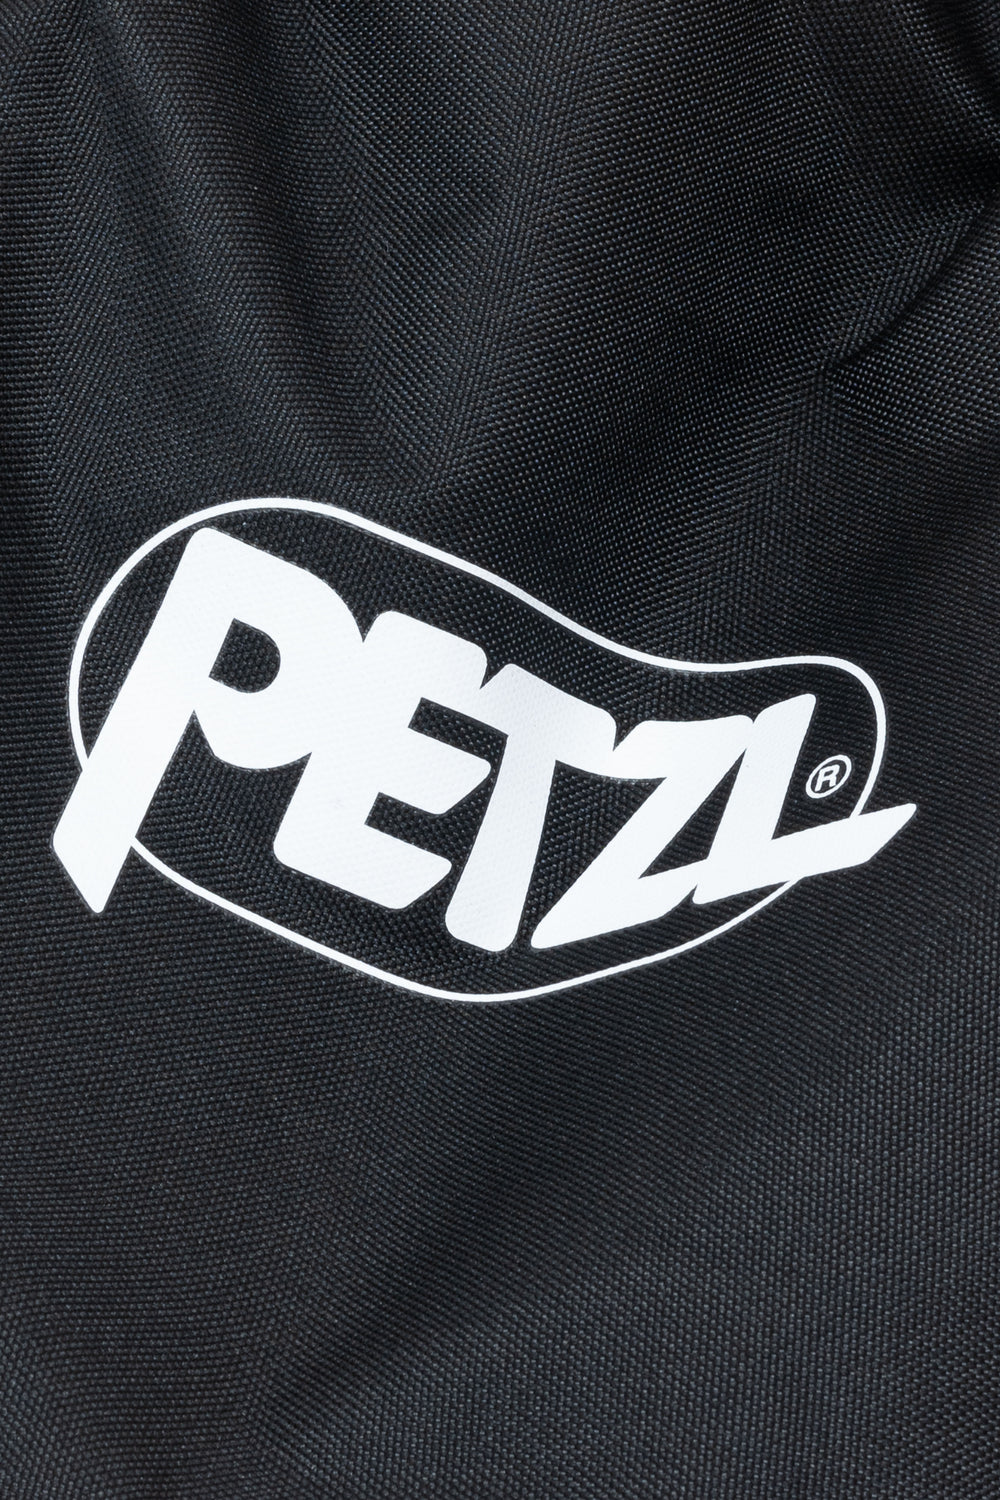 Petzl - Storage Bag for Vertex and Strato Helmets